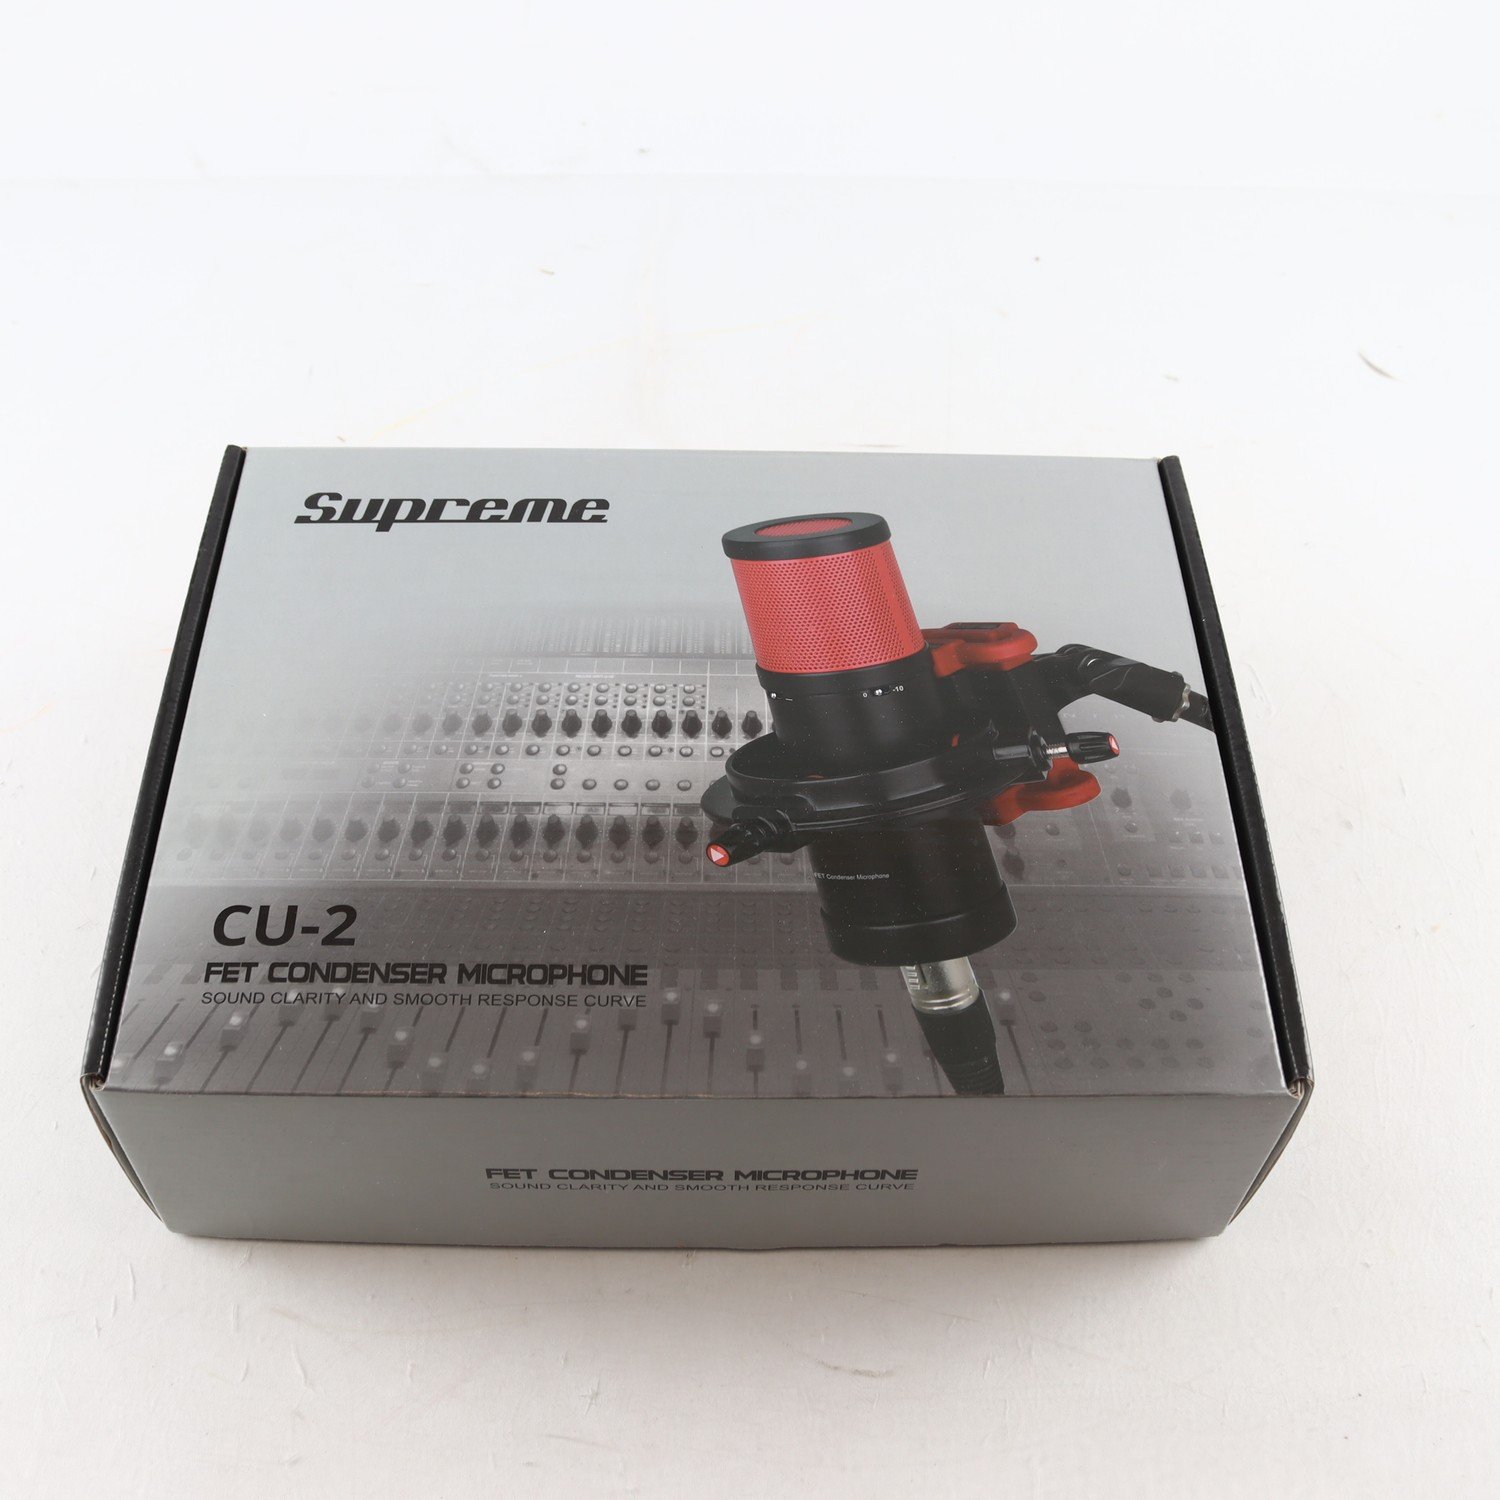 Mikrofon, Supreme CU-2, i org ask.